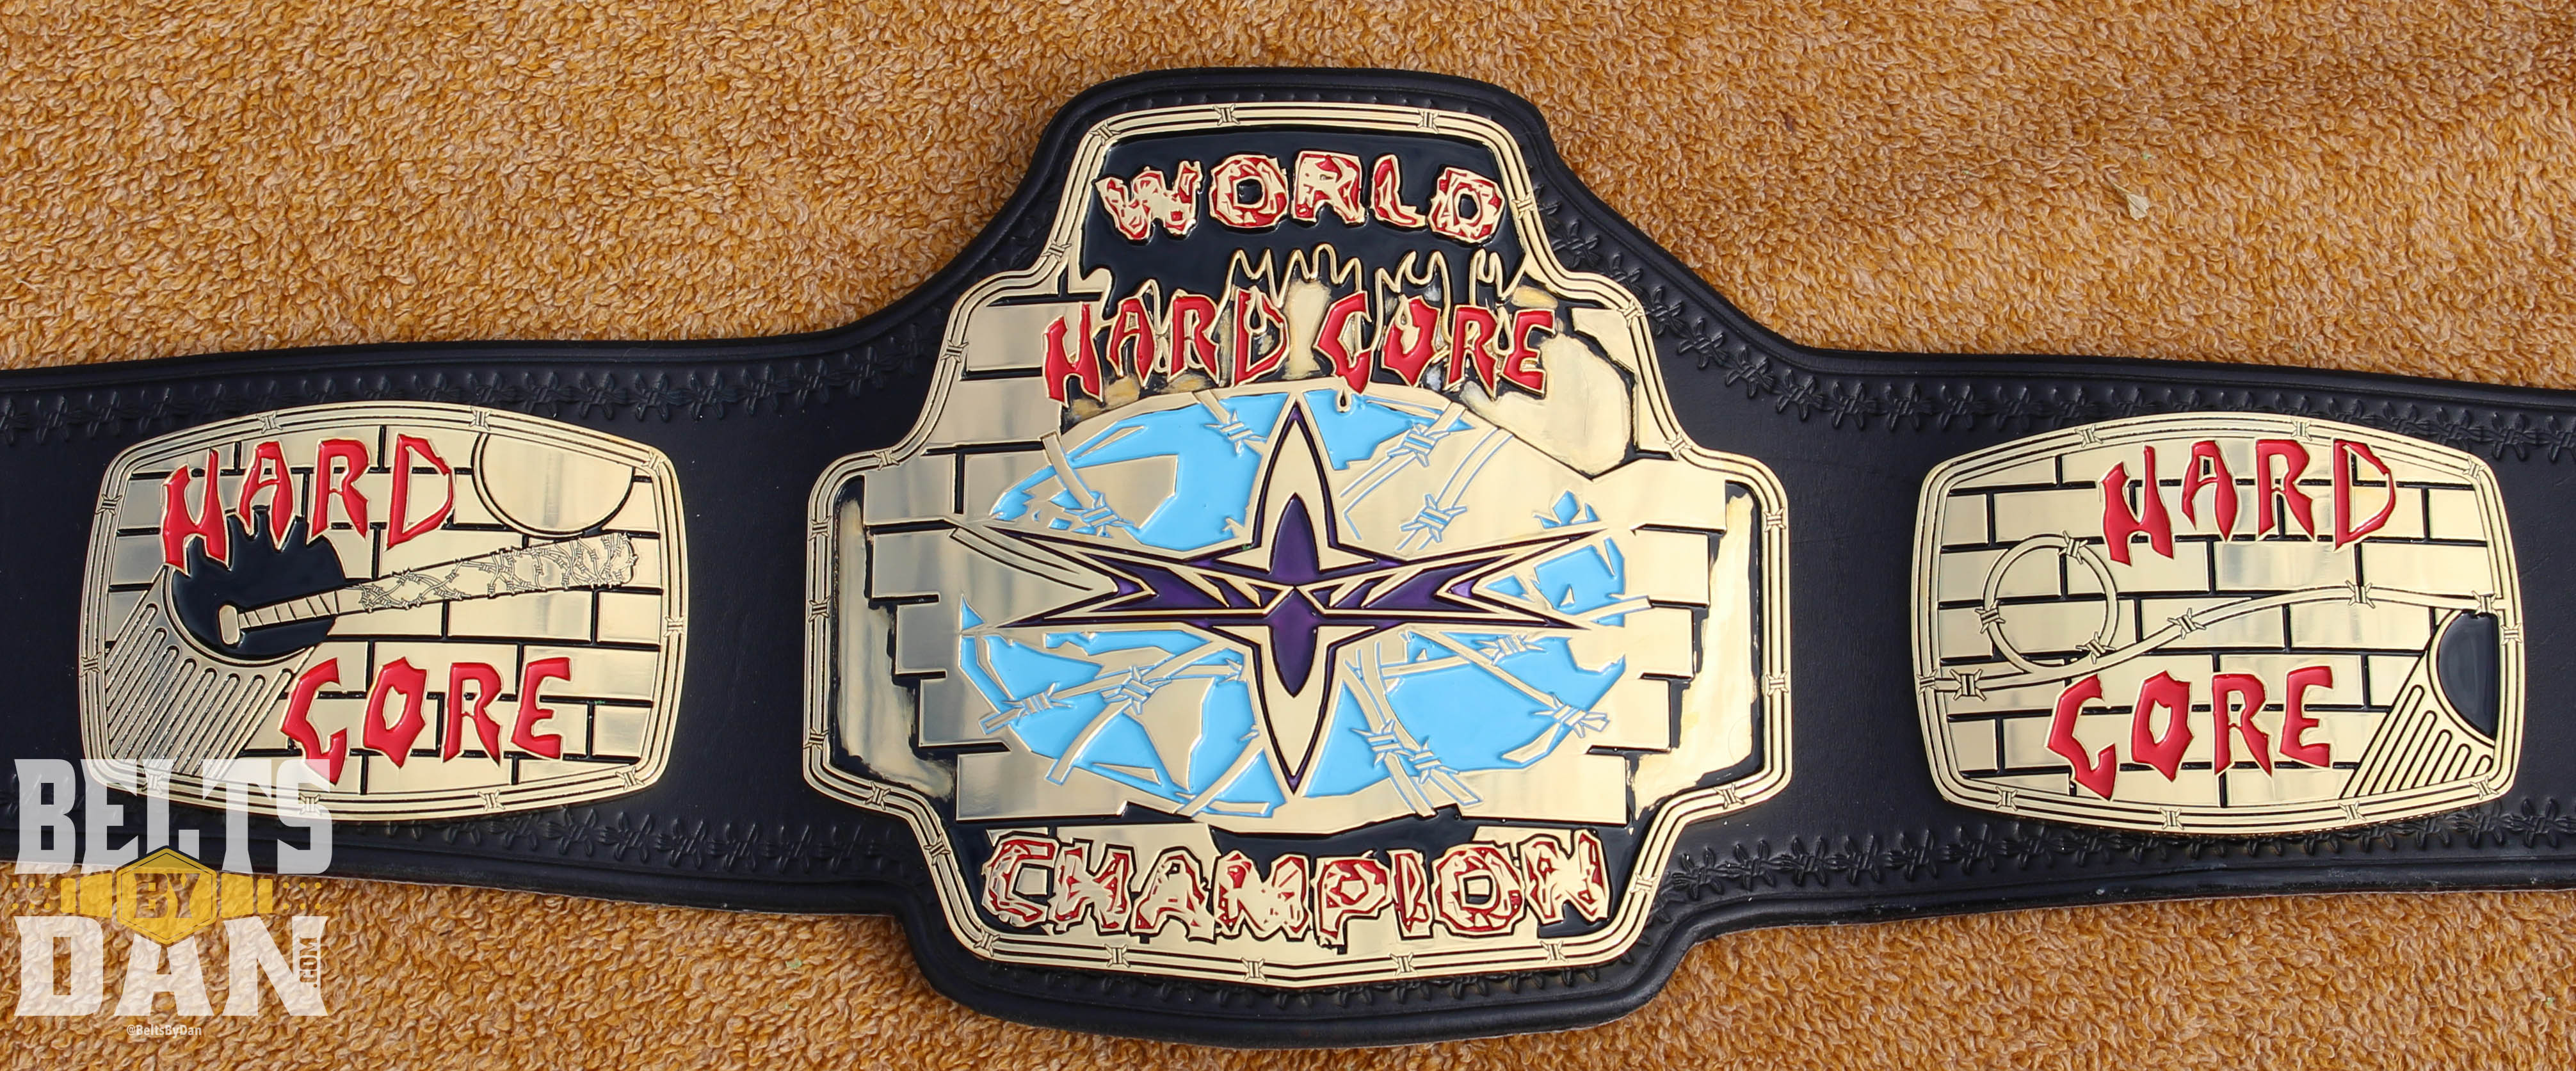 WSC Hardcore championsip title belts NEW 